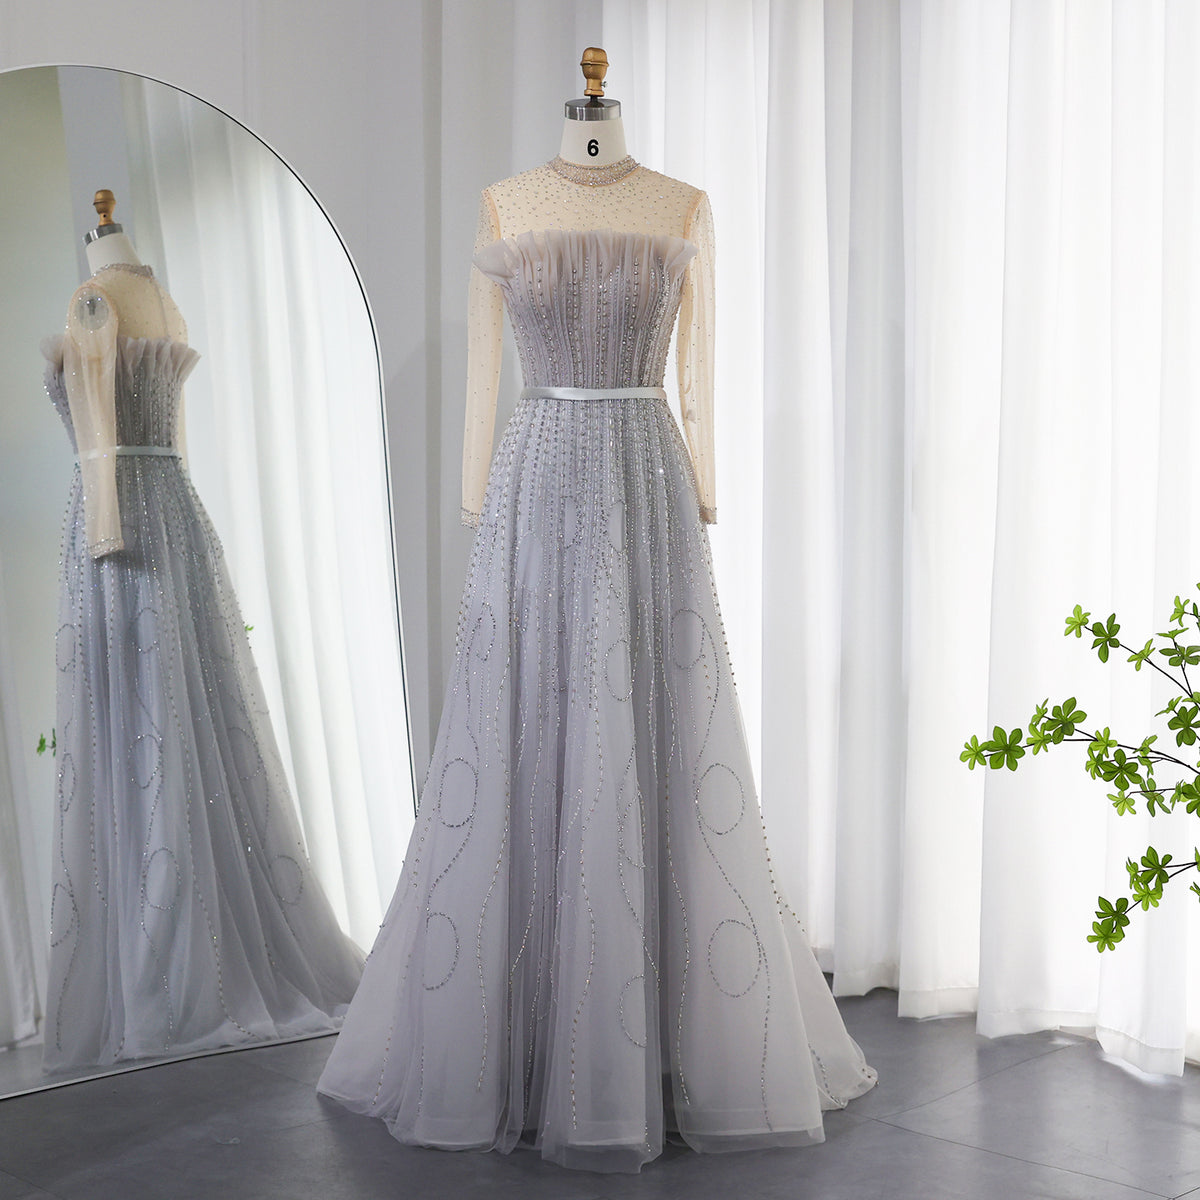 Sharon Said Luxury Dubai Silver Gray Evening Dresses for Women Wedding Party Long Sleeve Beaded Arabic Formal Prom Dresses SS215